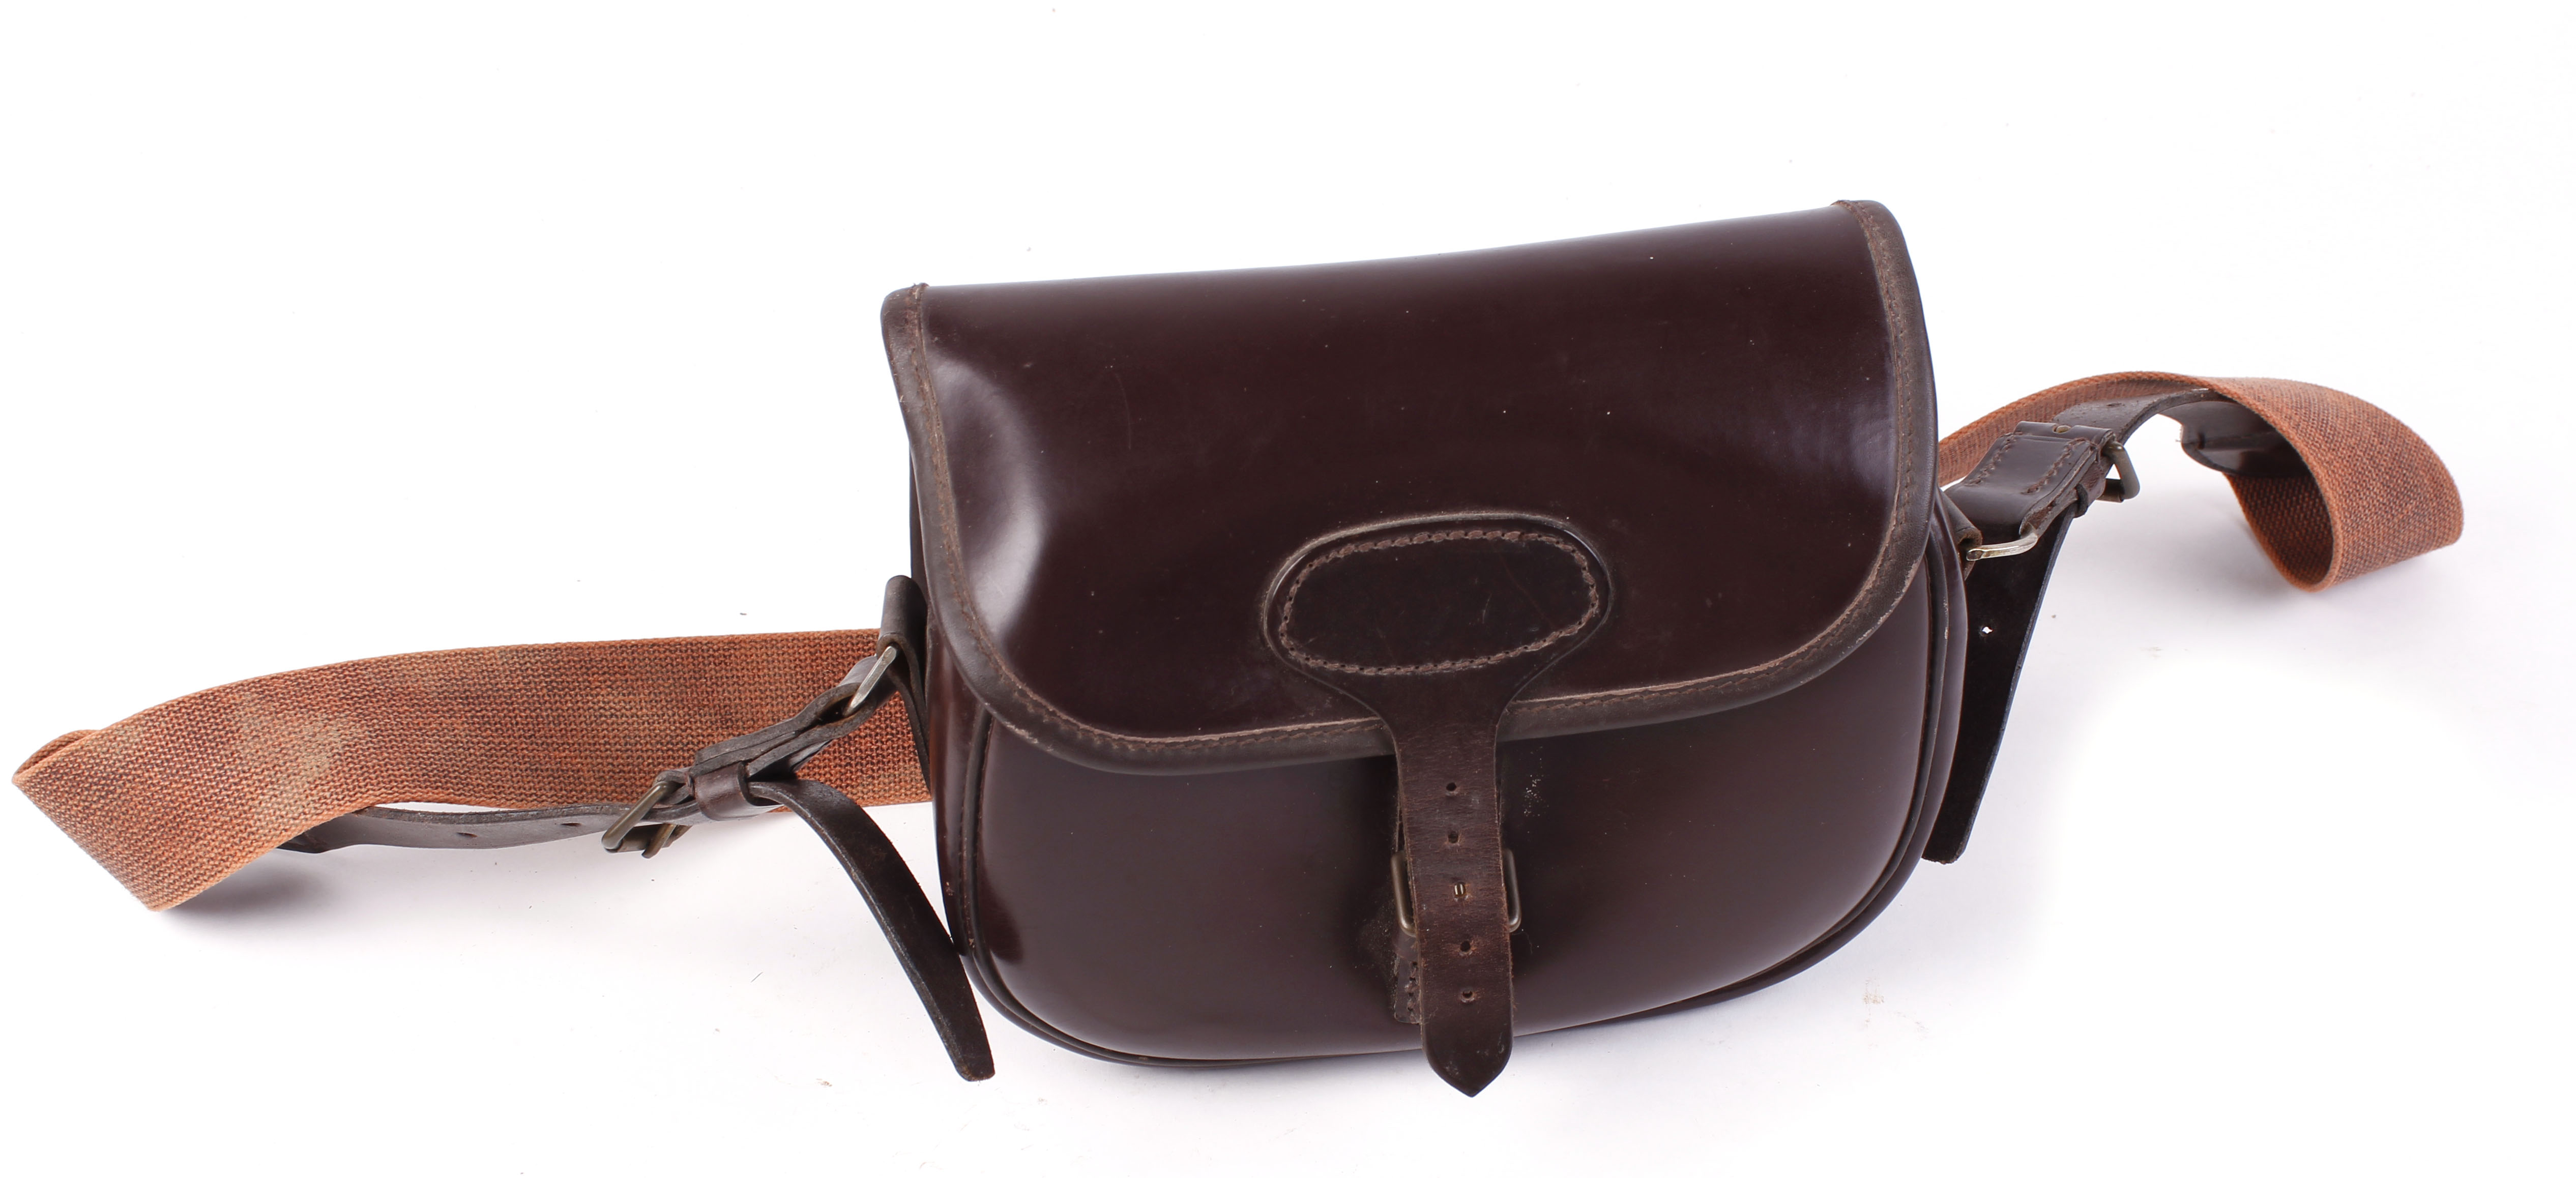 Brown leather cartridge bag, tan webbing strap